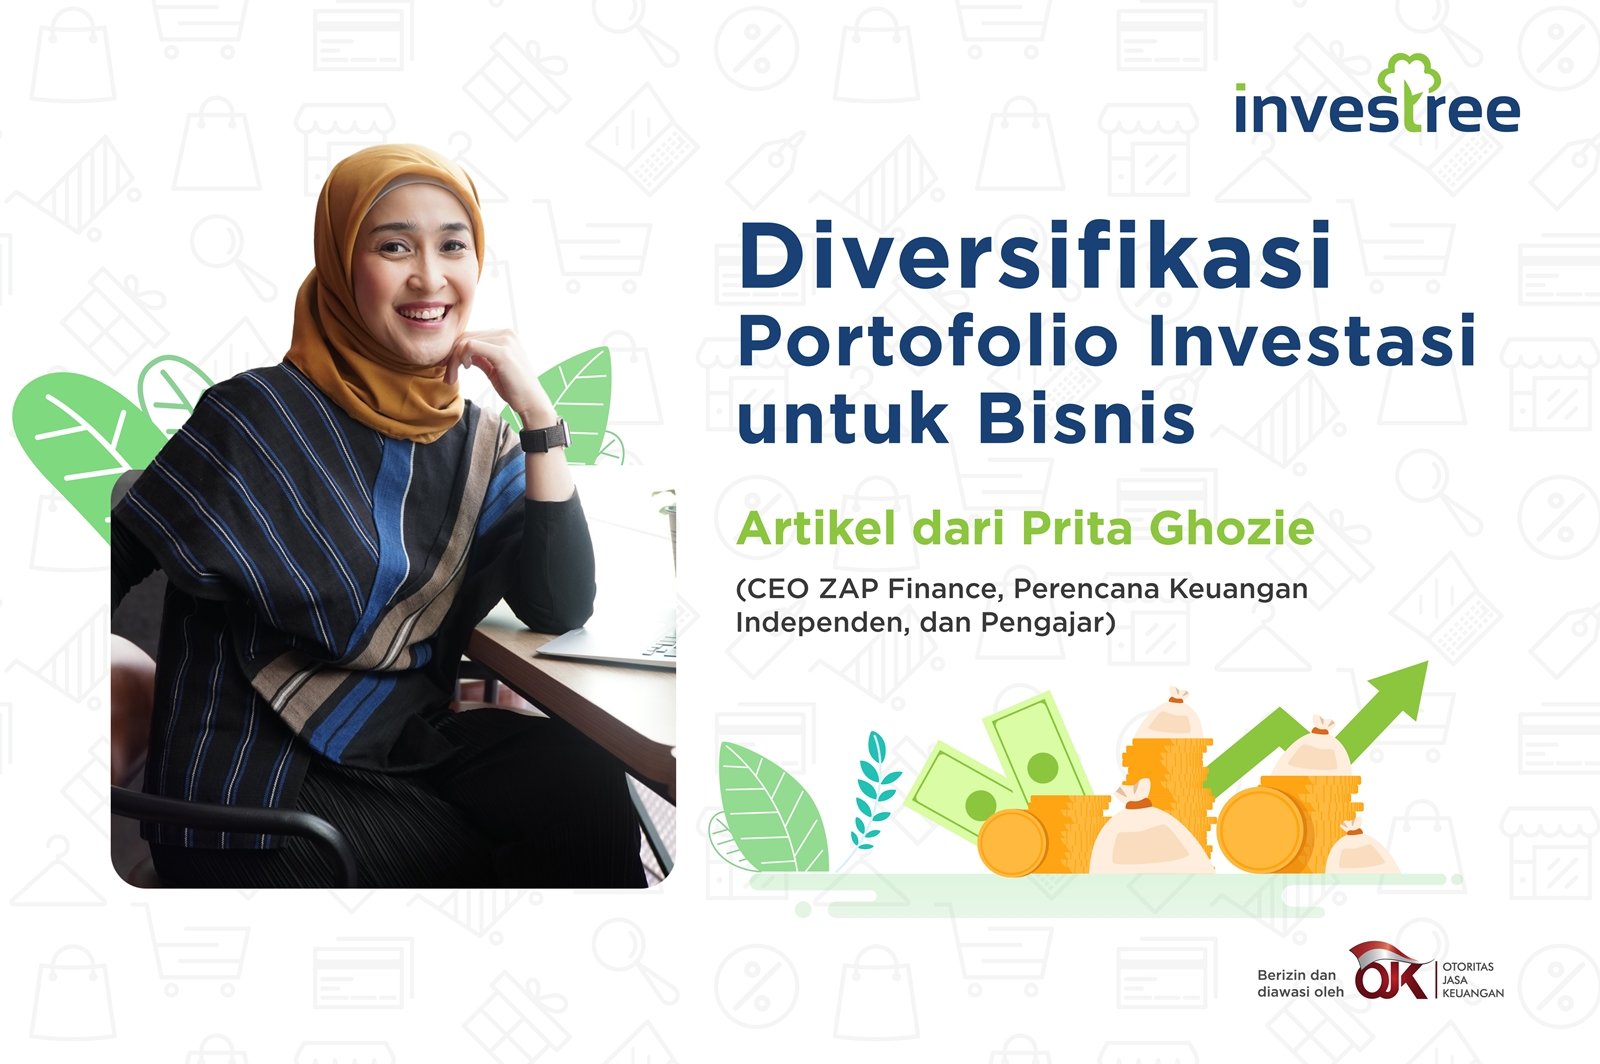 Expert Article Prita Ghozie: Diversifikasi Portofolio Investasi untuk Bisnis